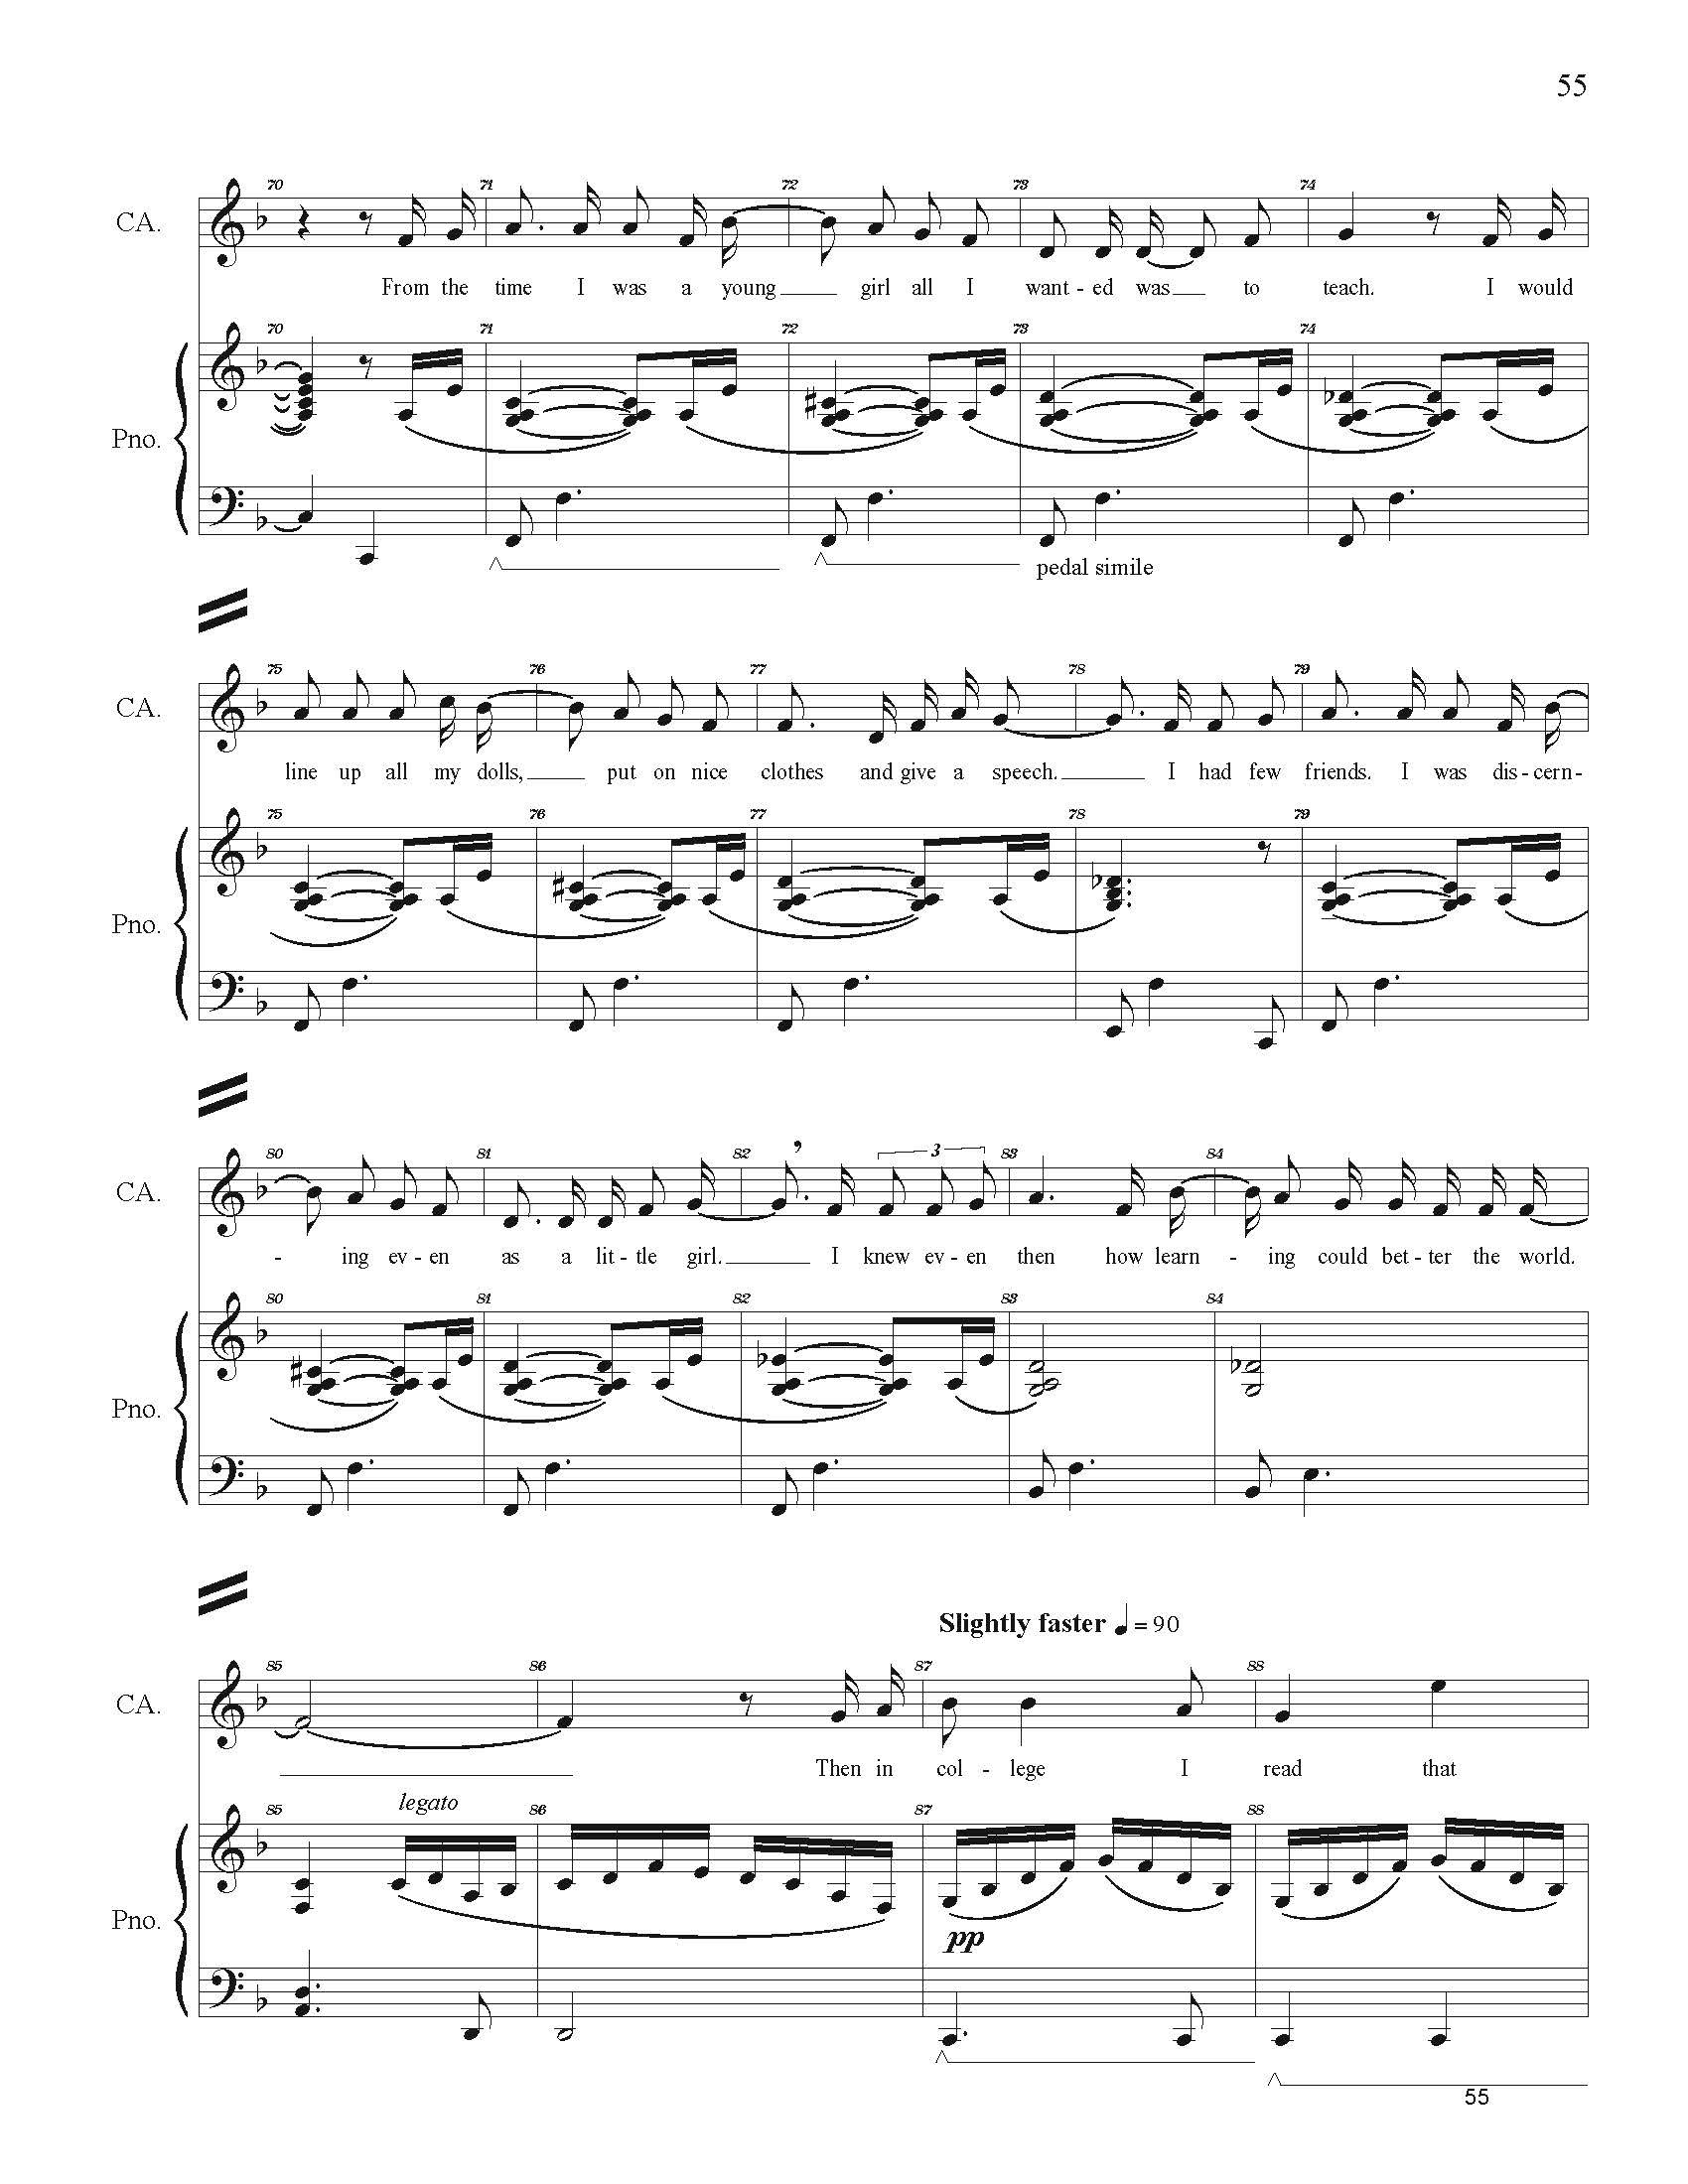 FULL PIANO VOCAL SCORE DRAFT 1 - Score_Page_055.jpg